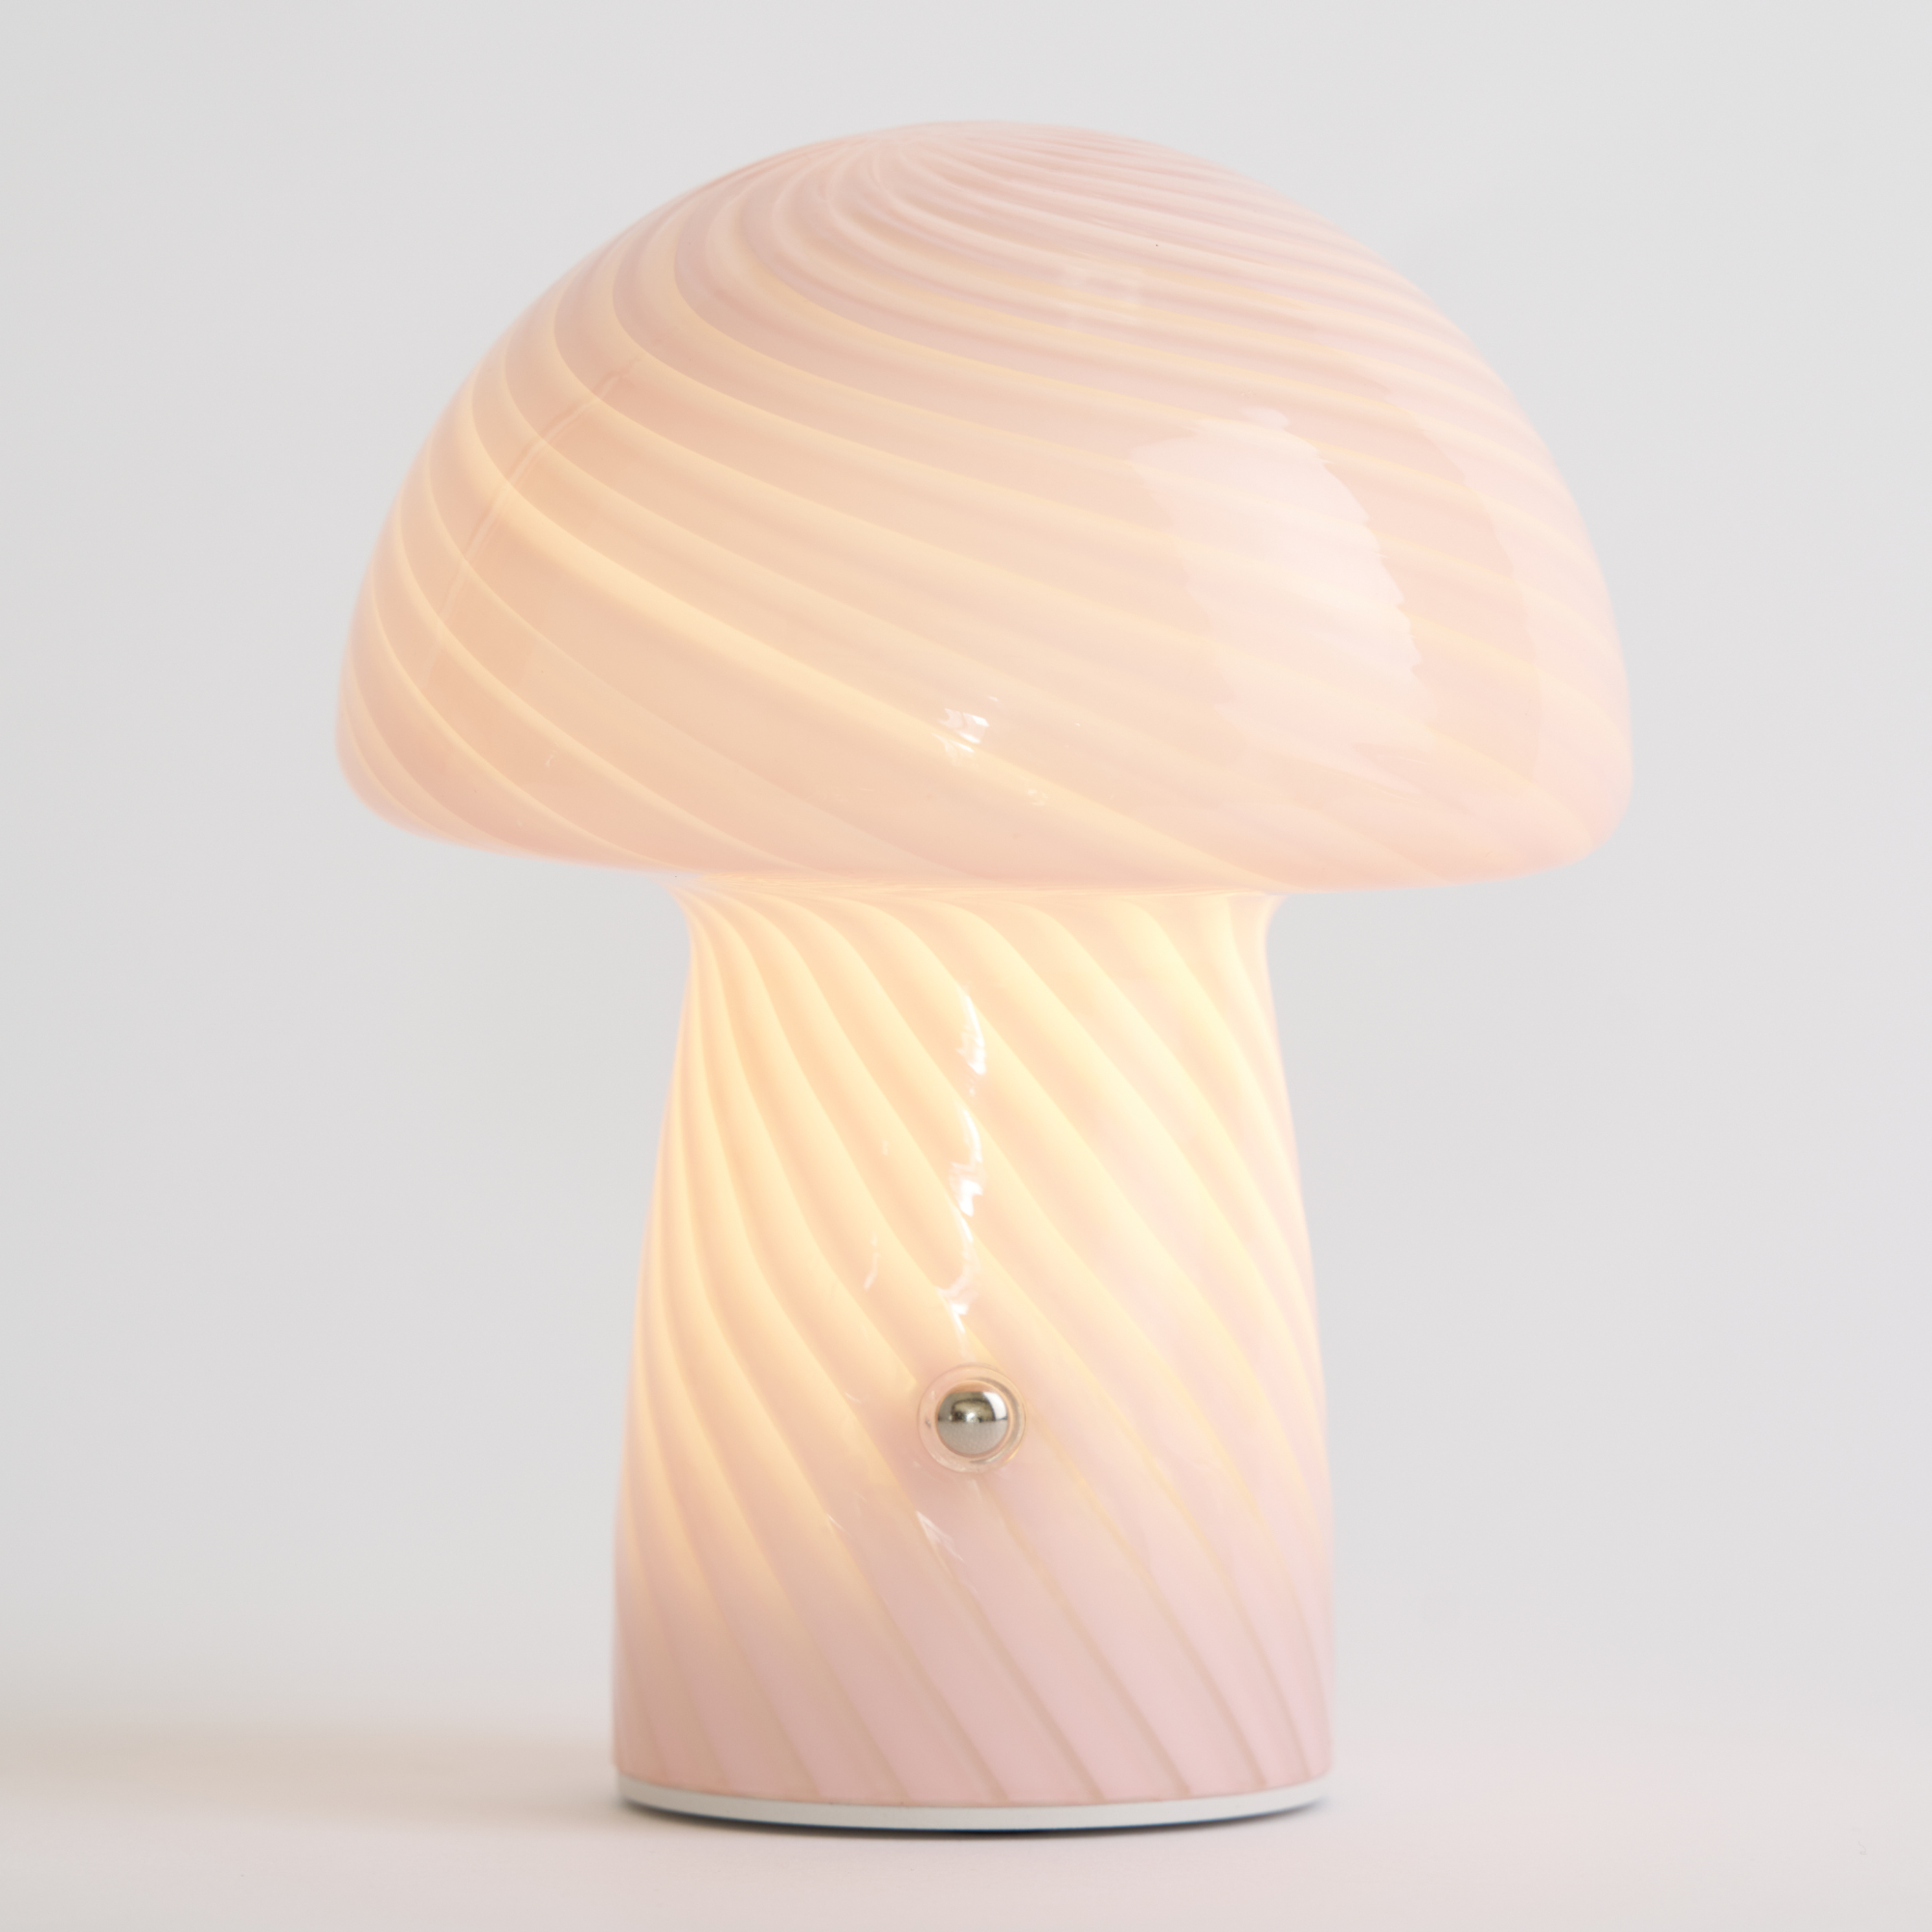 Portable Mini Glass Mushroom Lamp, Pink